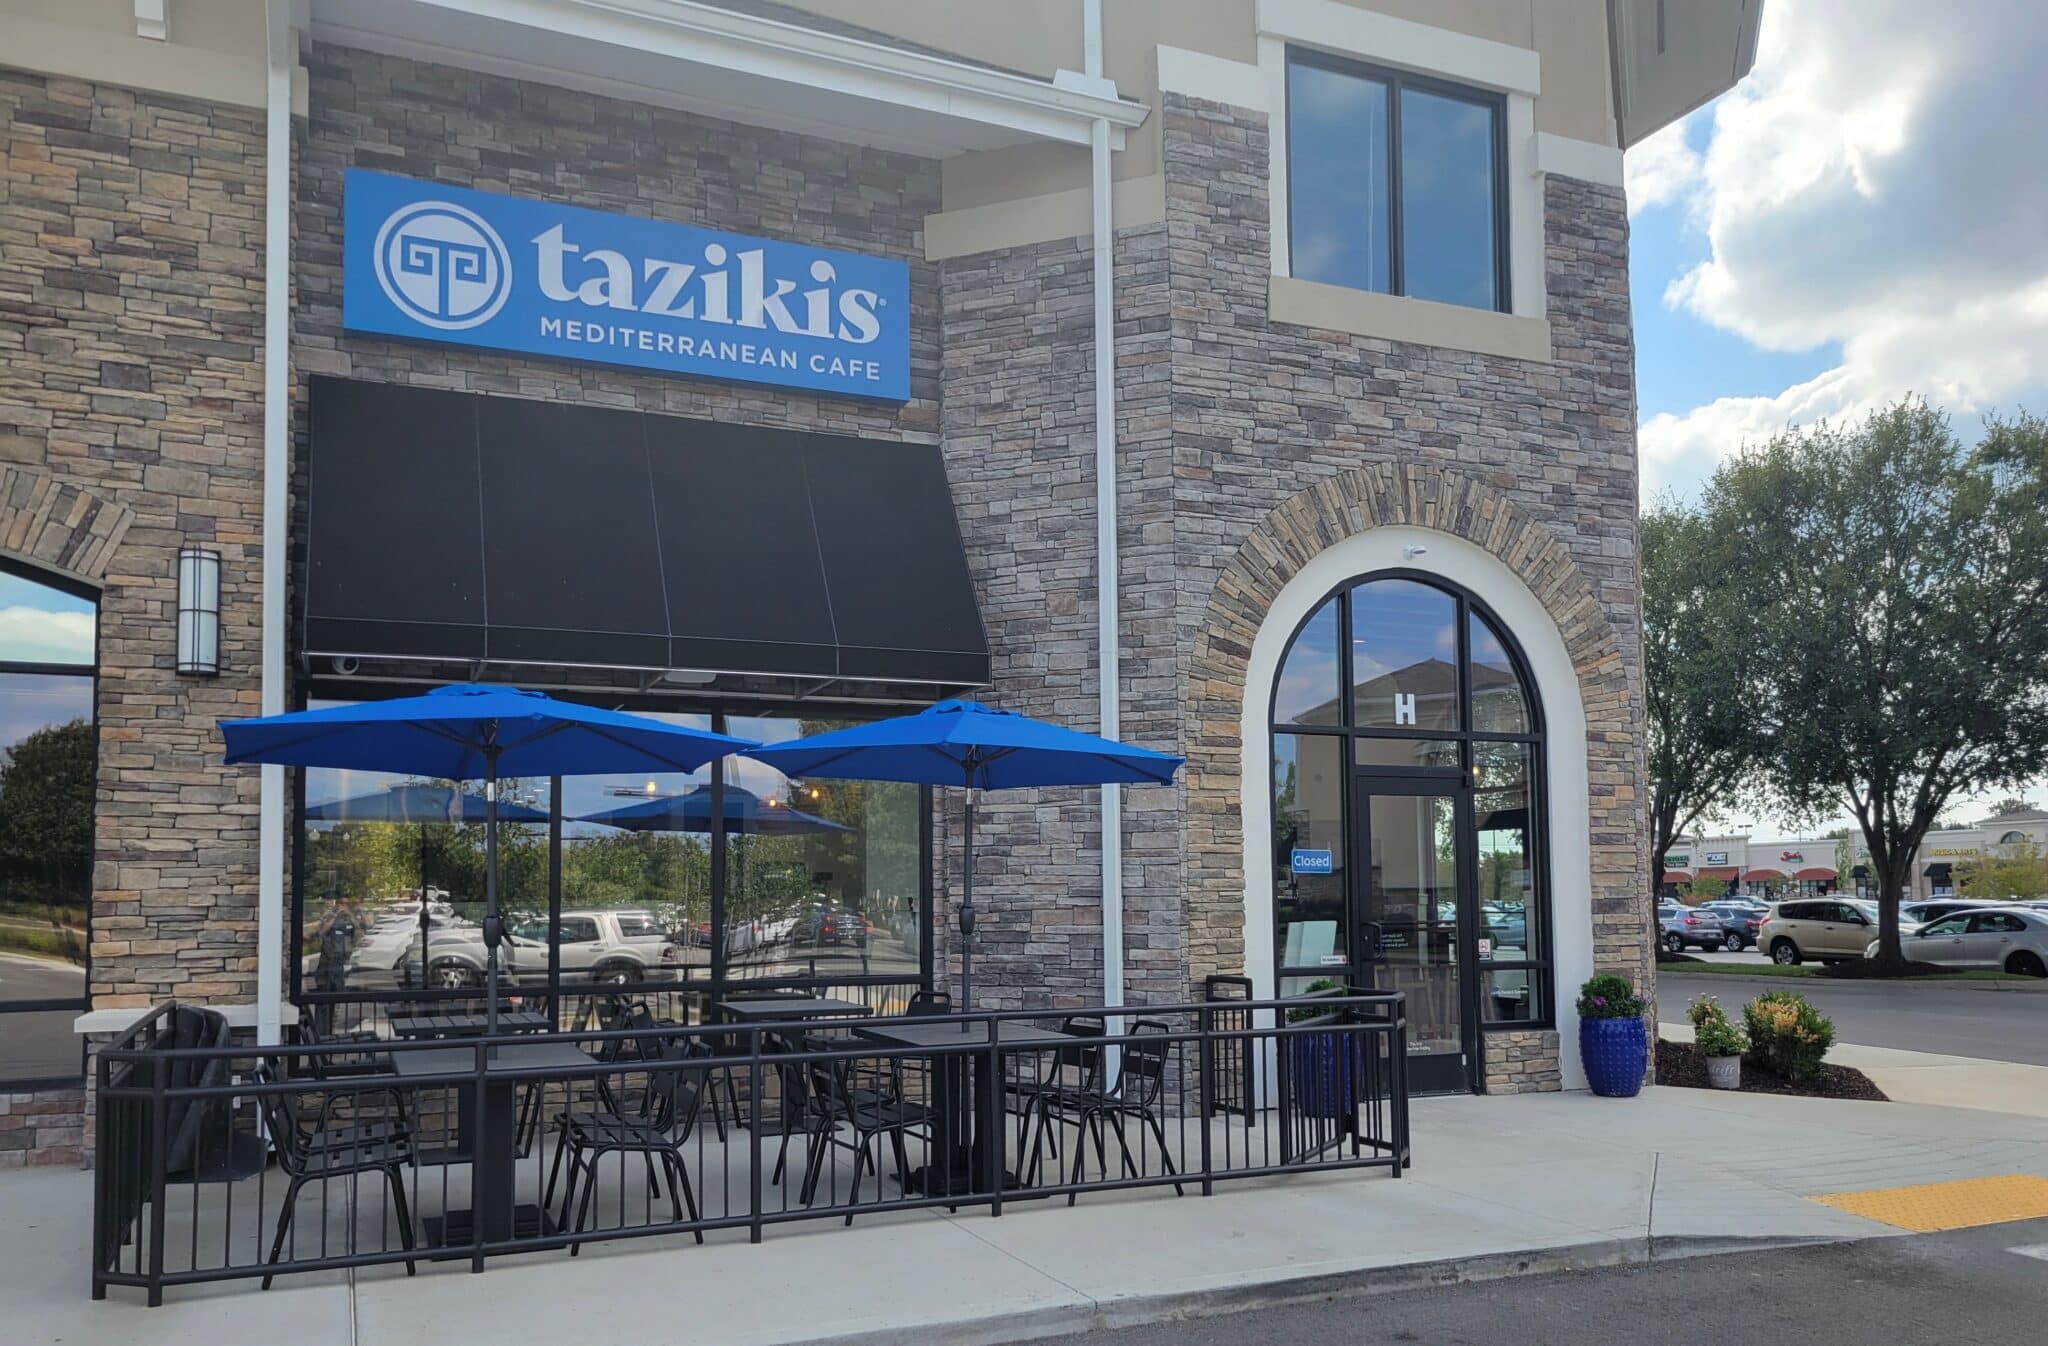 Taziki's Restaurant in Murfreesboro, Tennessee in The Oaks - Exterior.